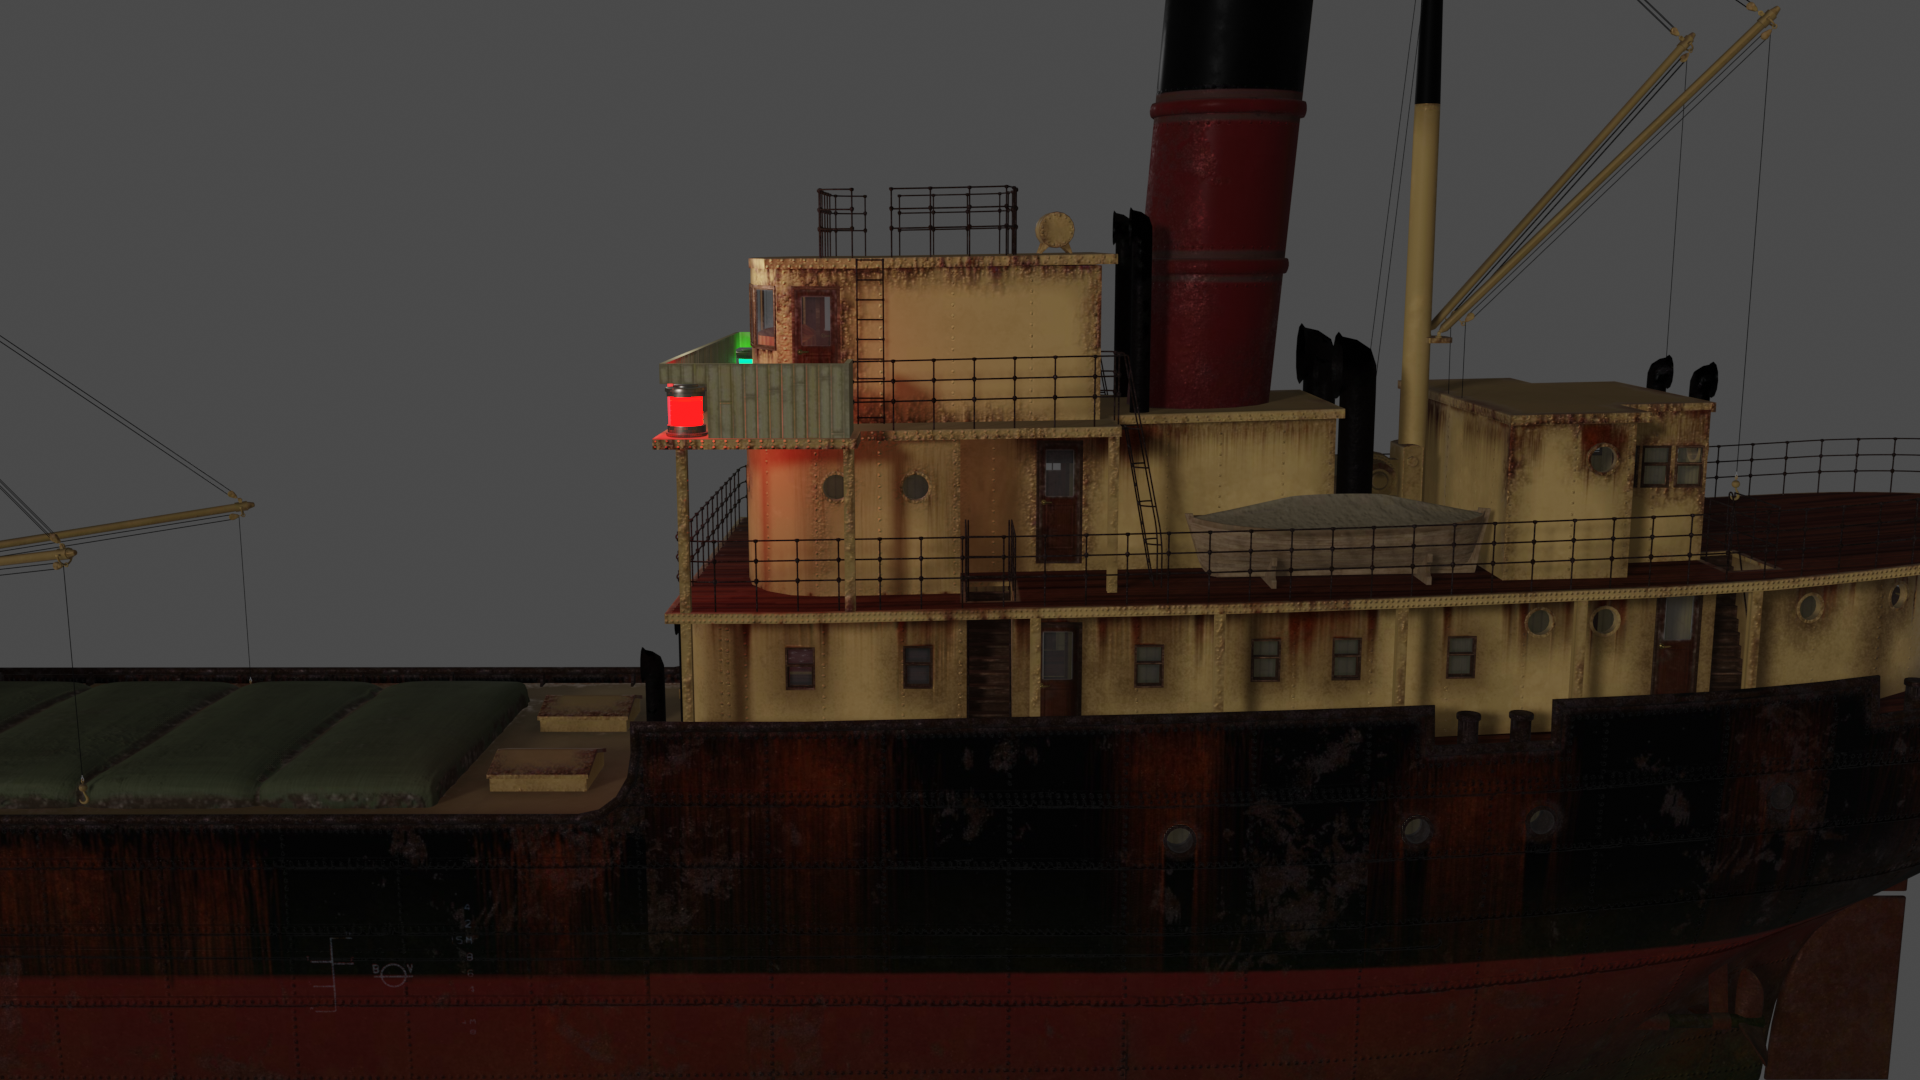 Tramp Steamship preview image 6